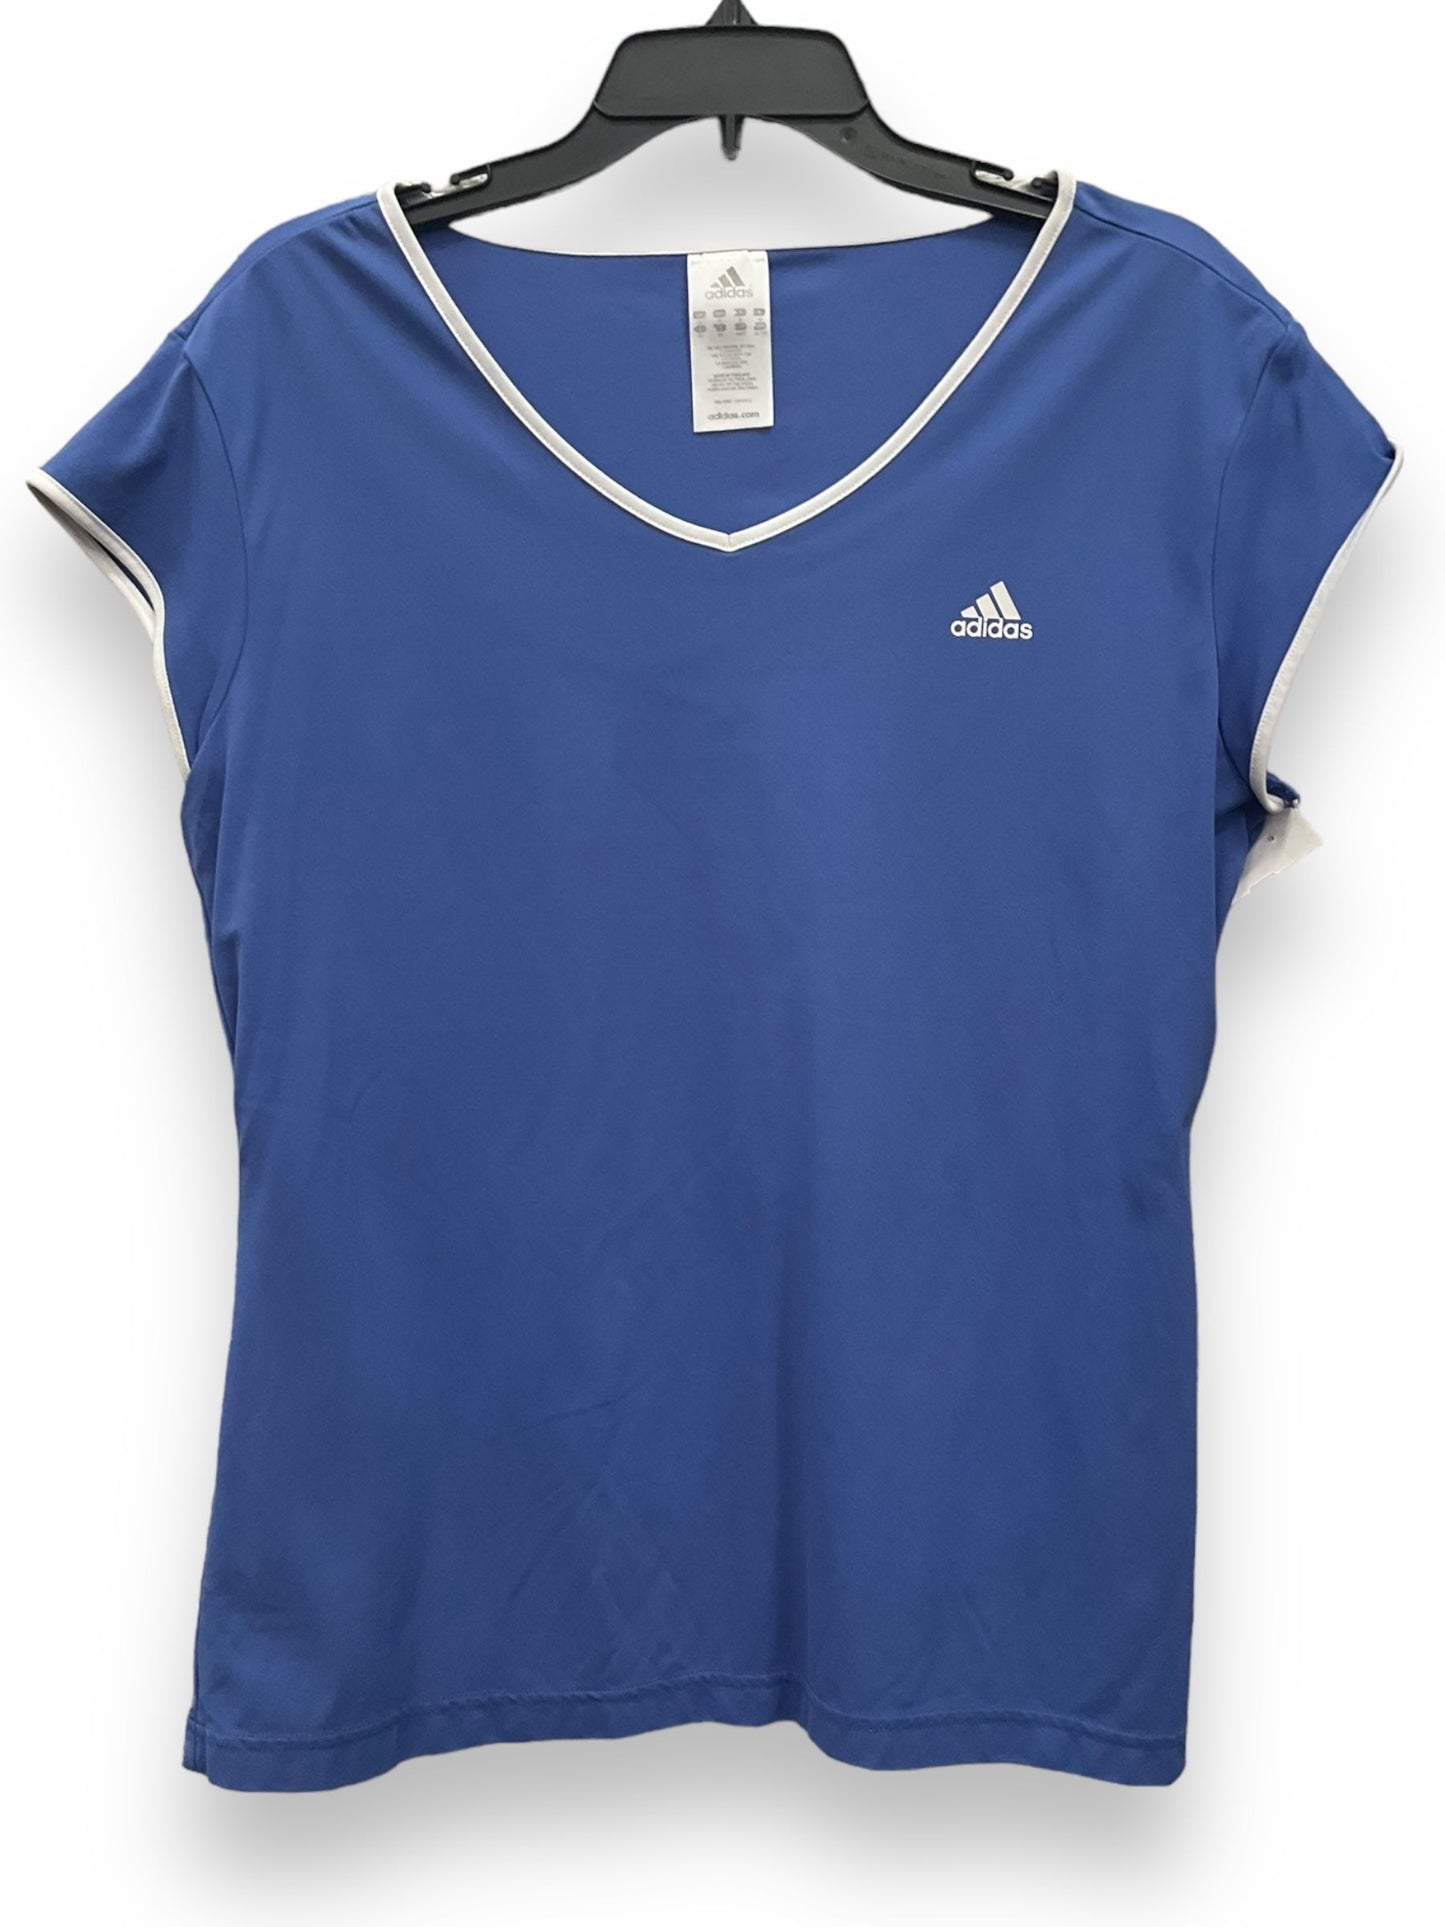 Blue Athletic Top Short Sleeve Adidas, Size Xl